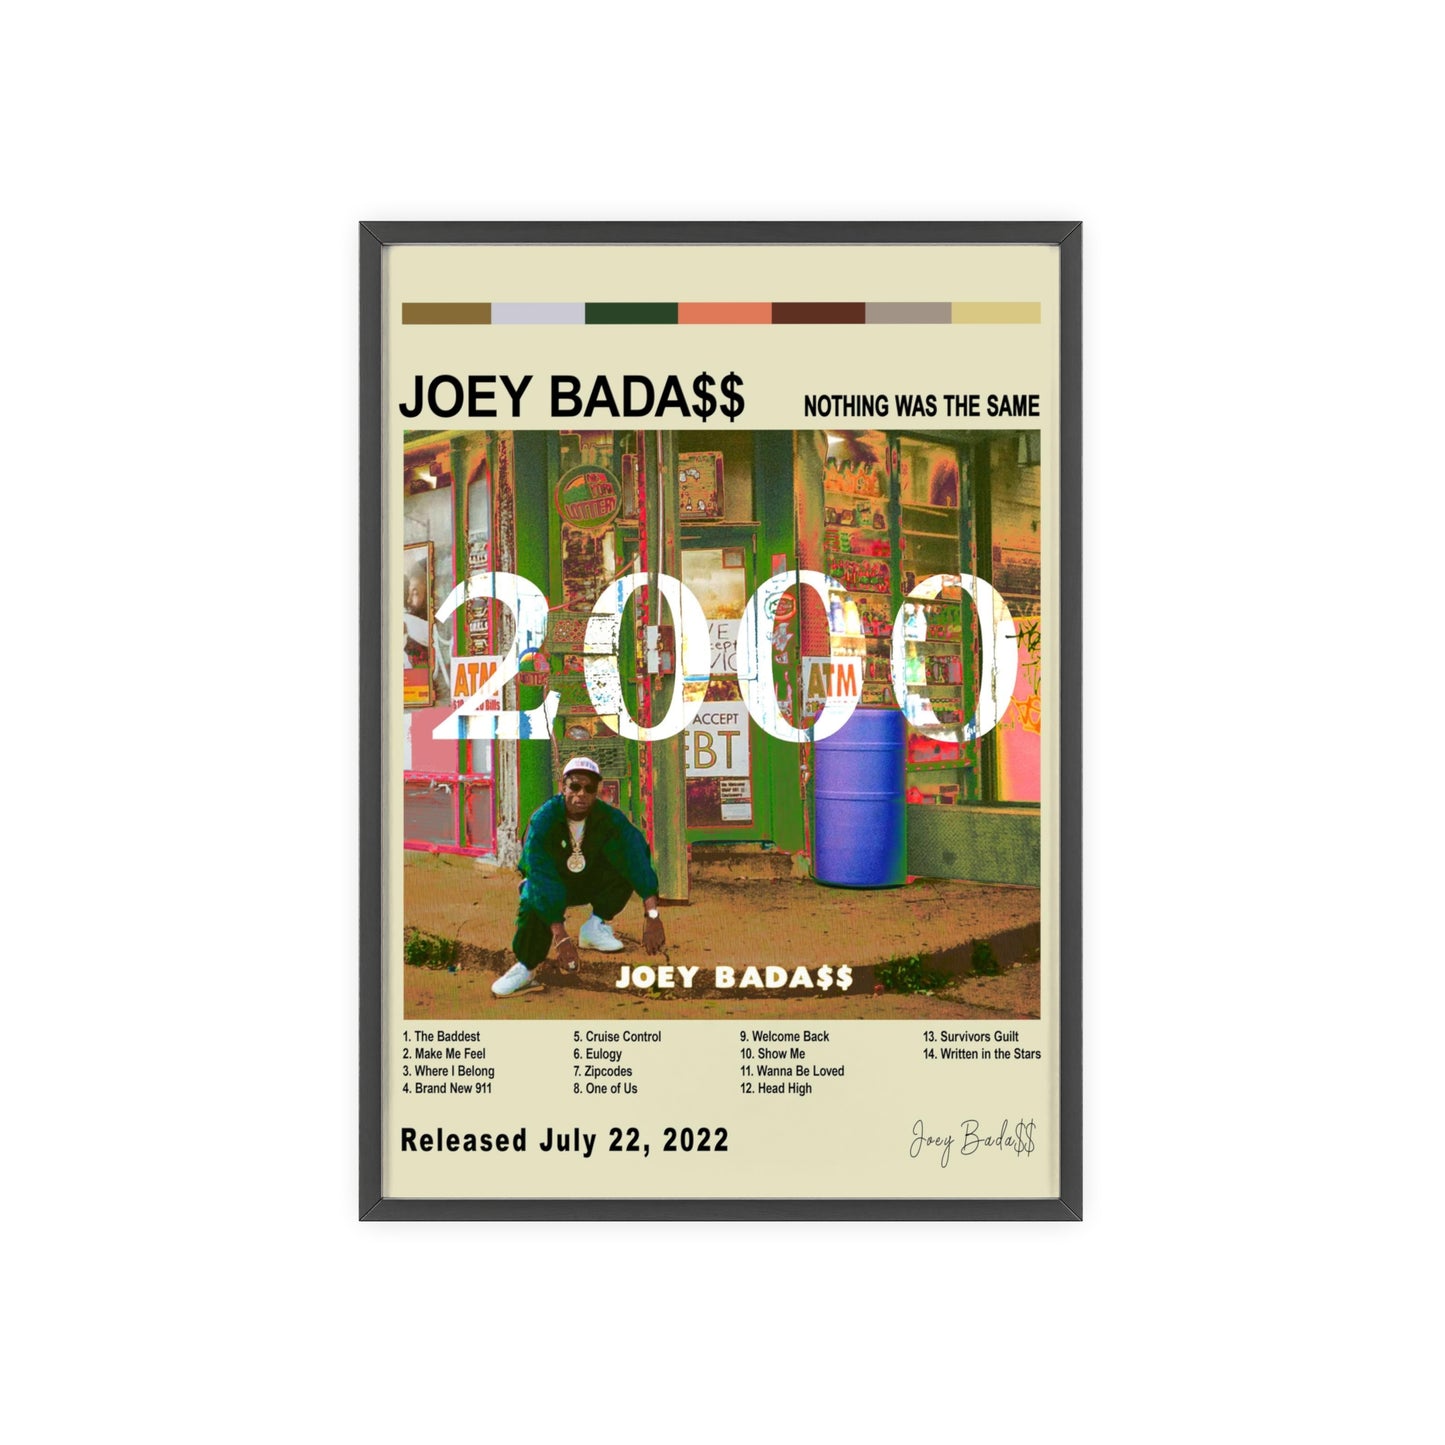 Joey Bada$$ - 2000 Album Cover Poster